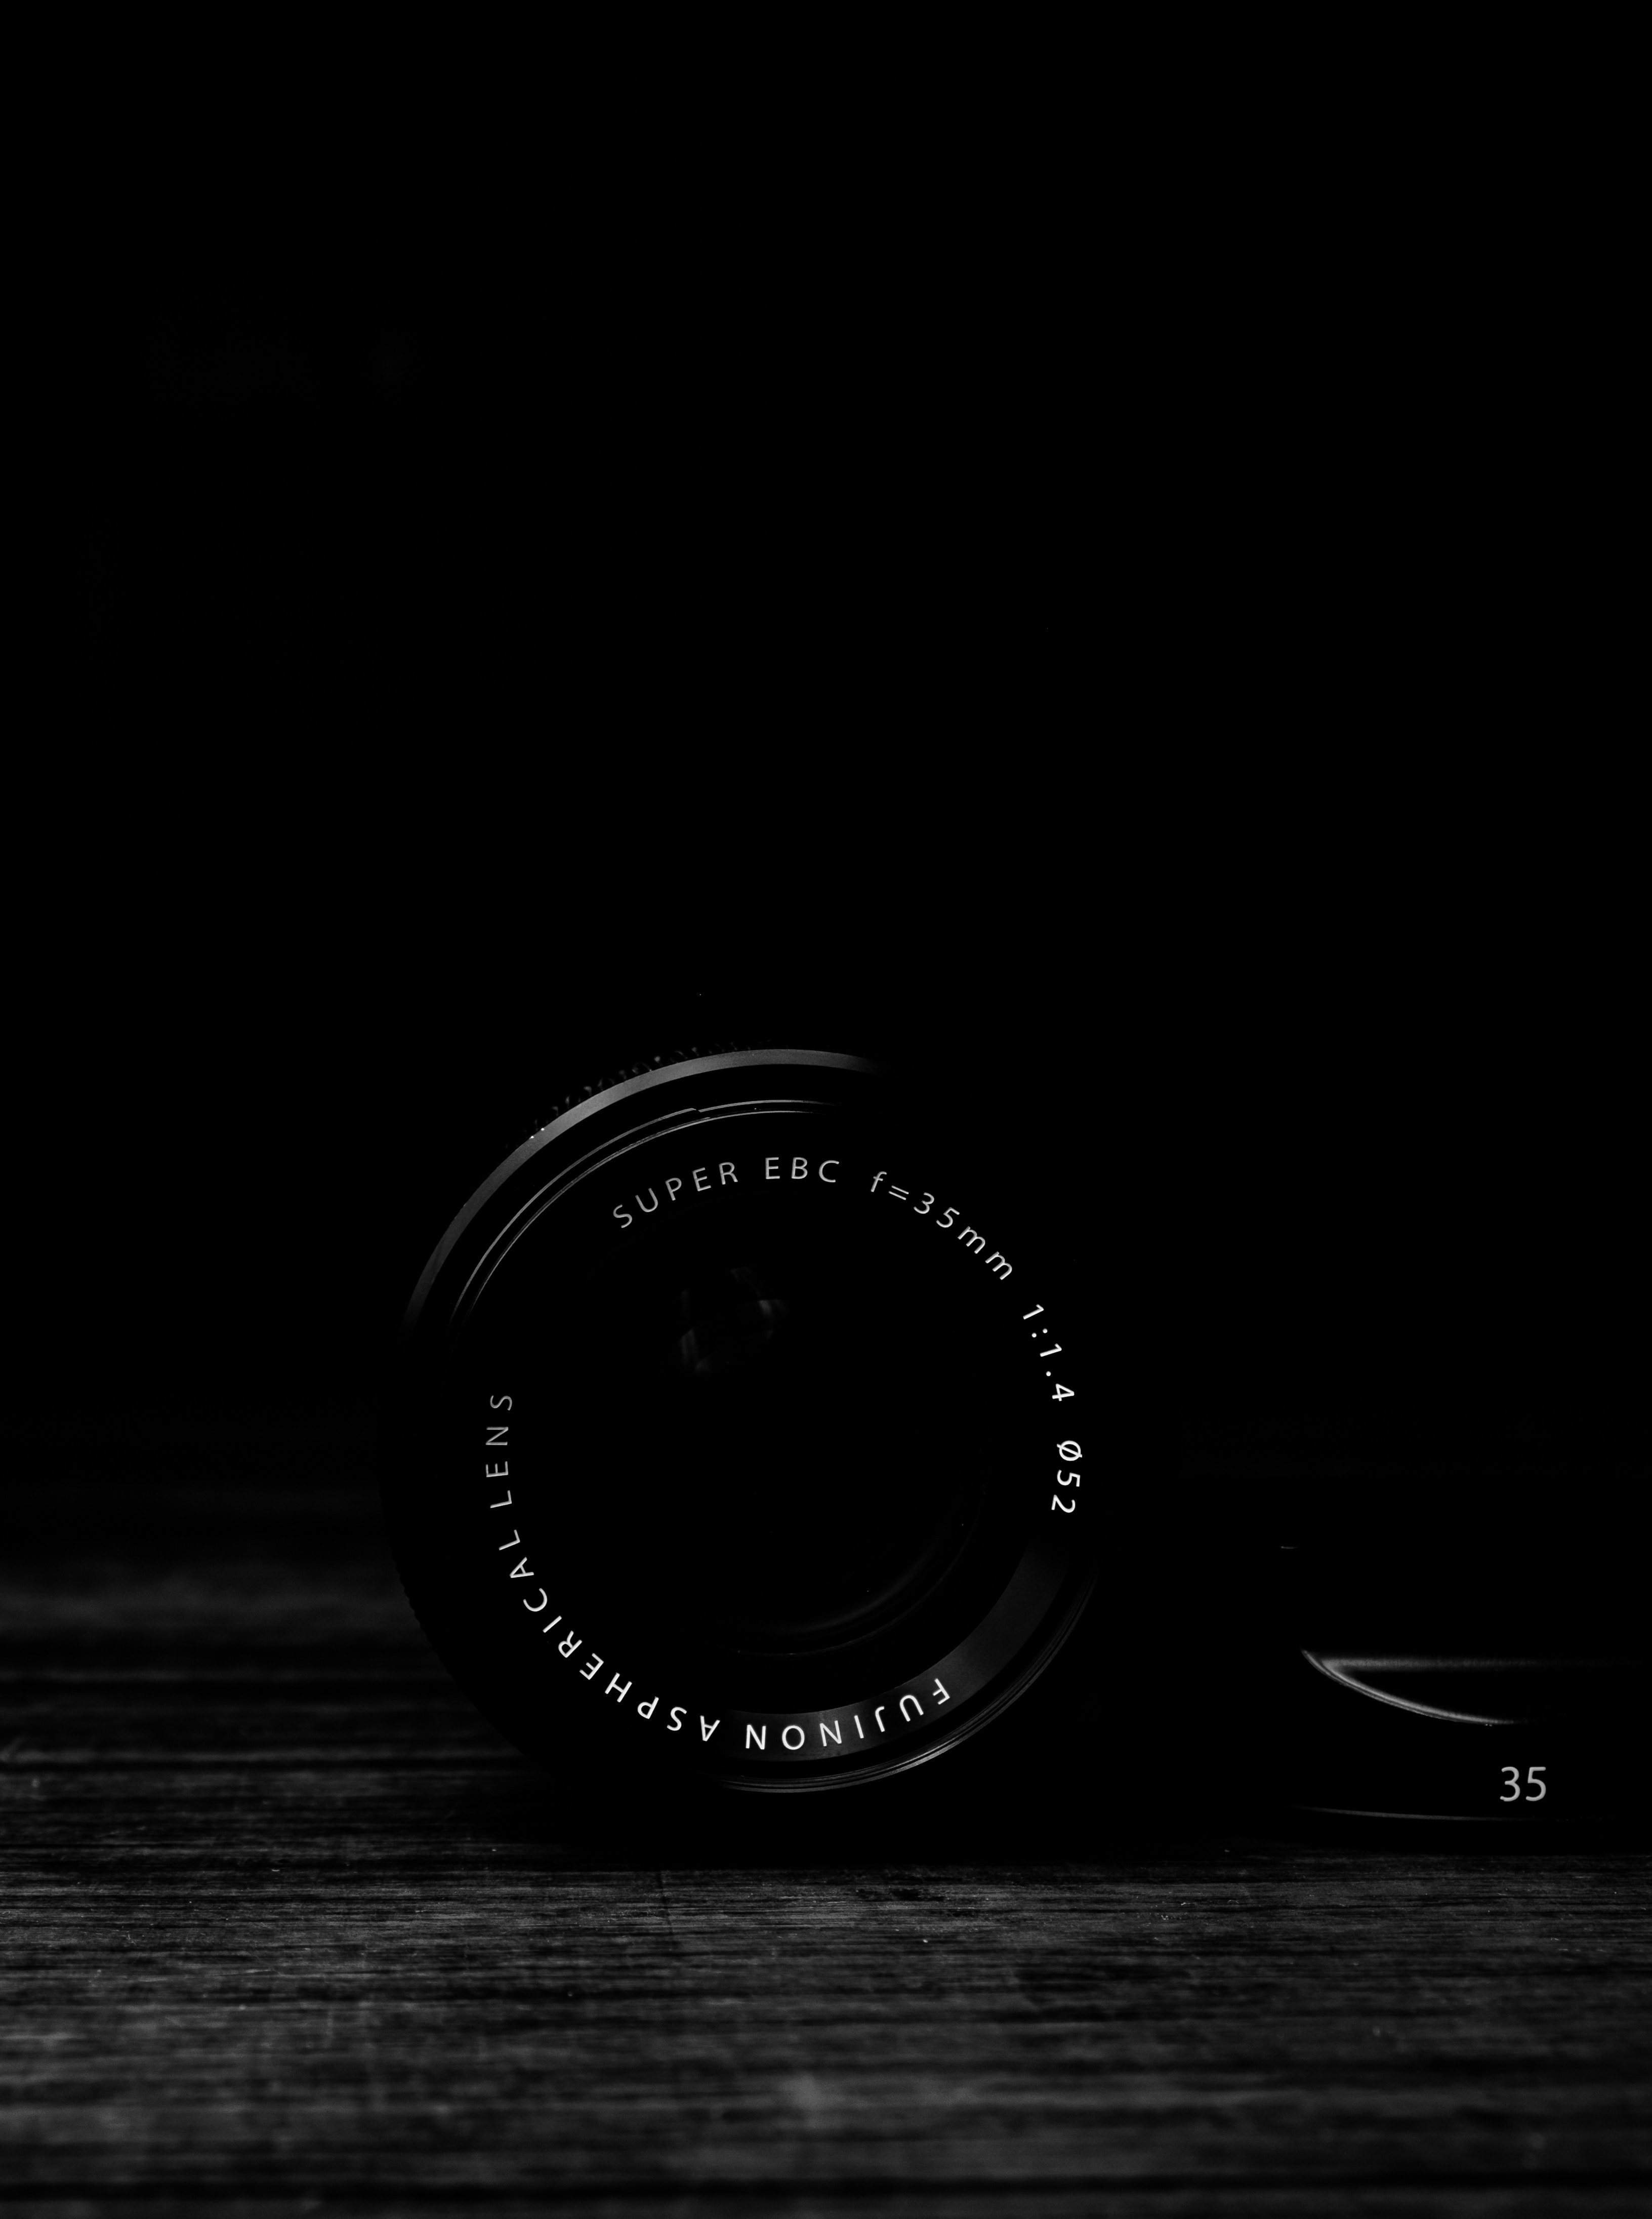 camera, black, dark, technologies, lens, technology, optics